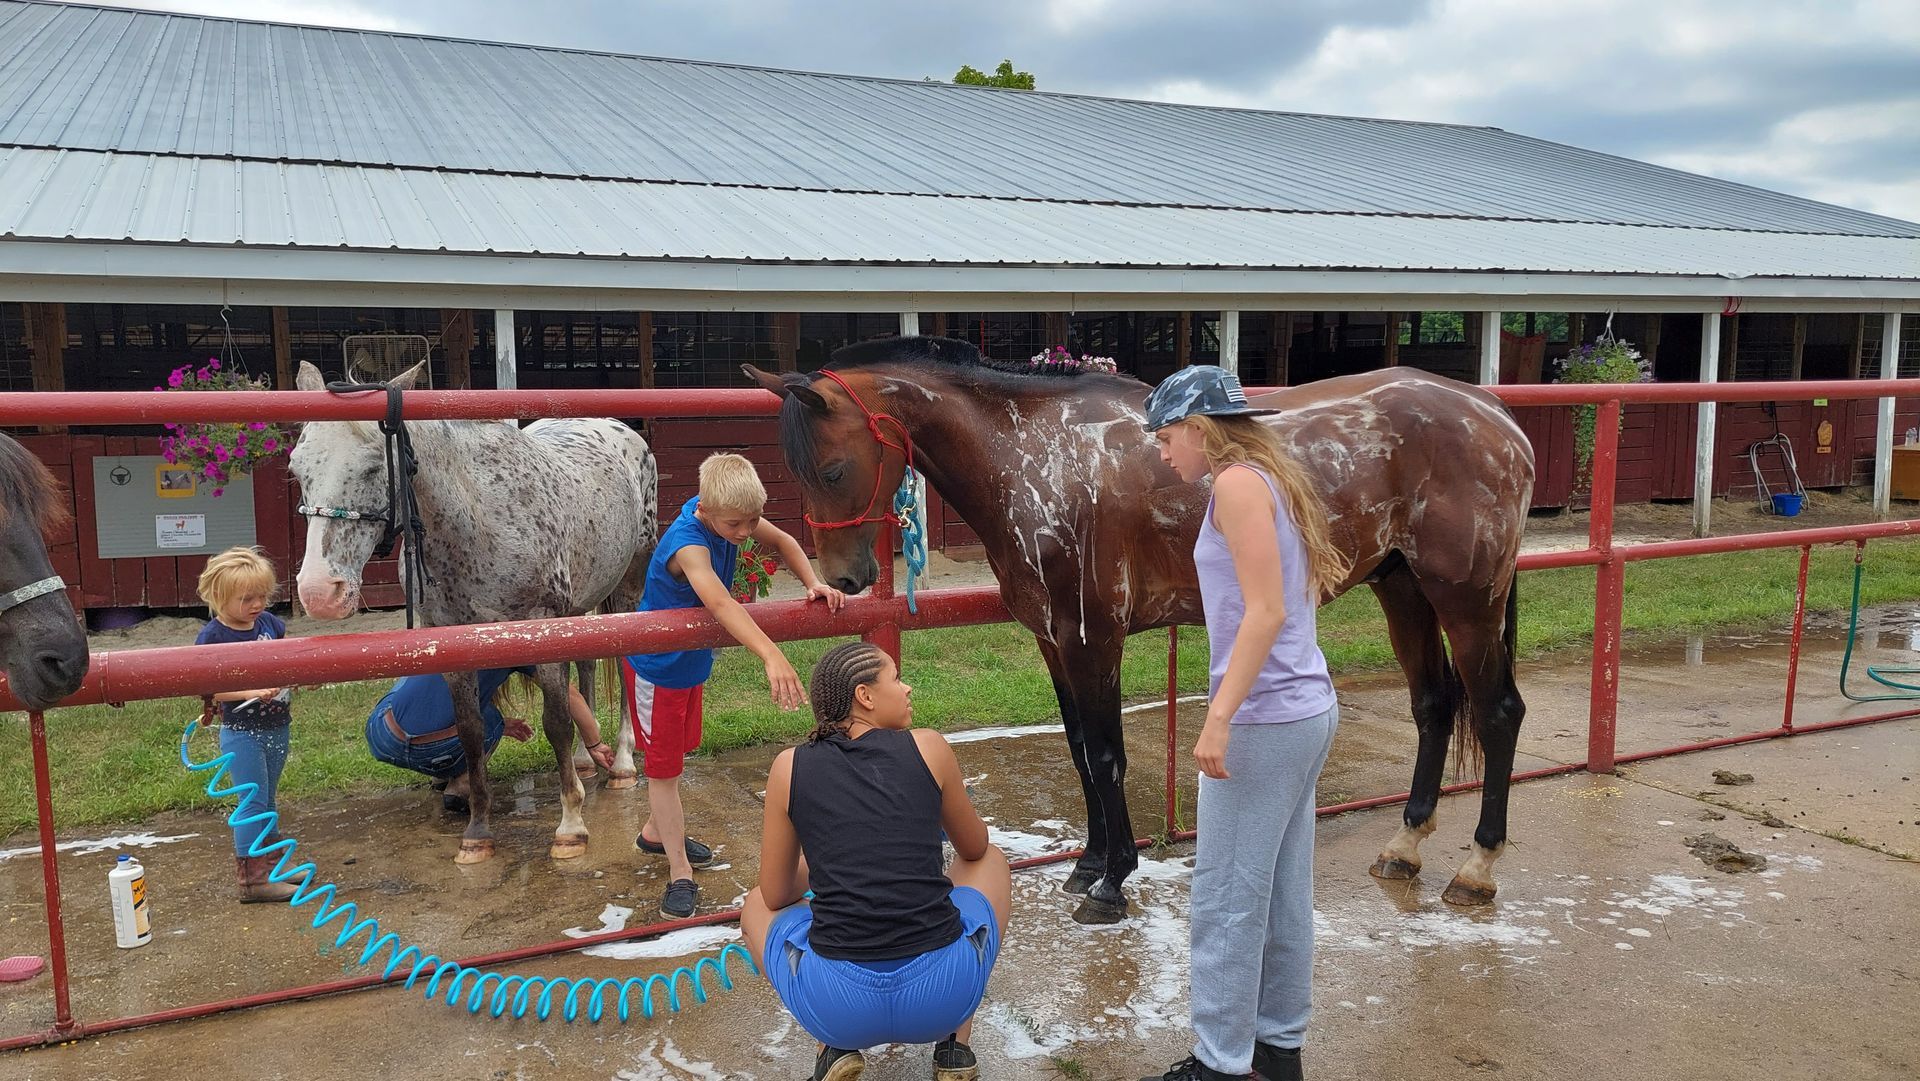 Giving the horses a bath.